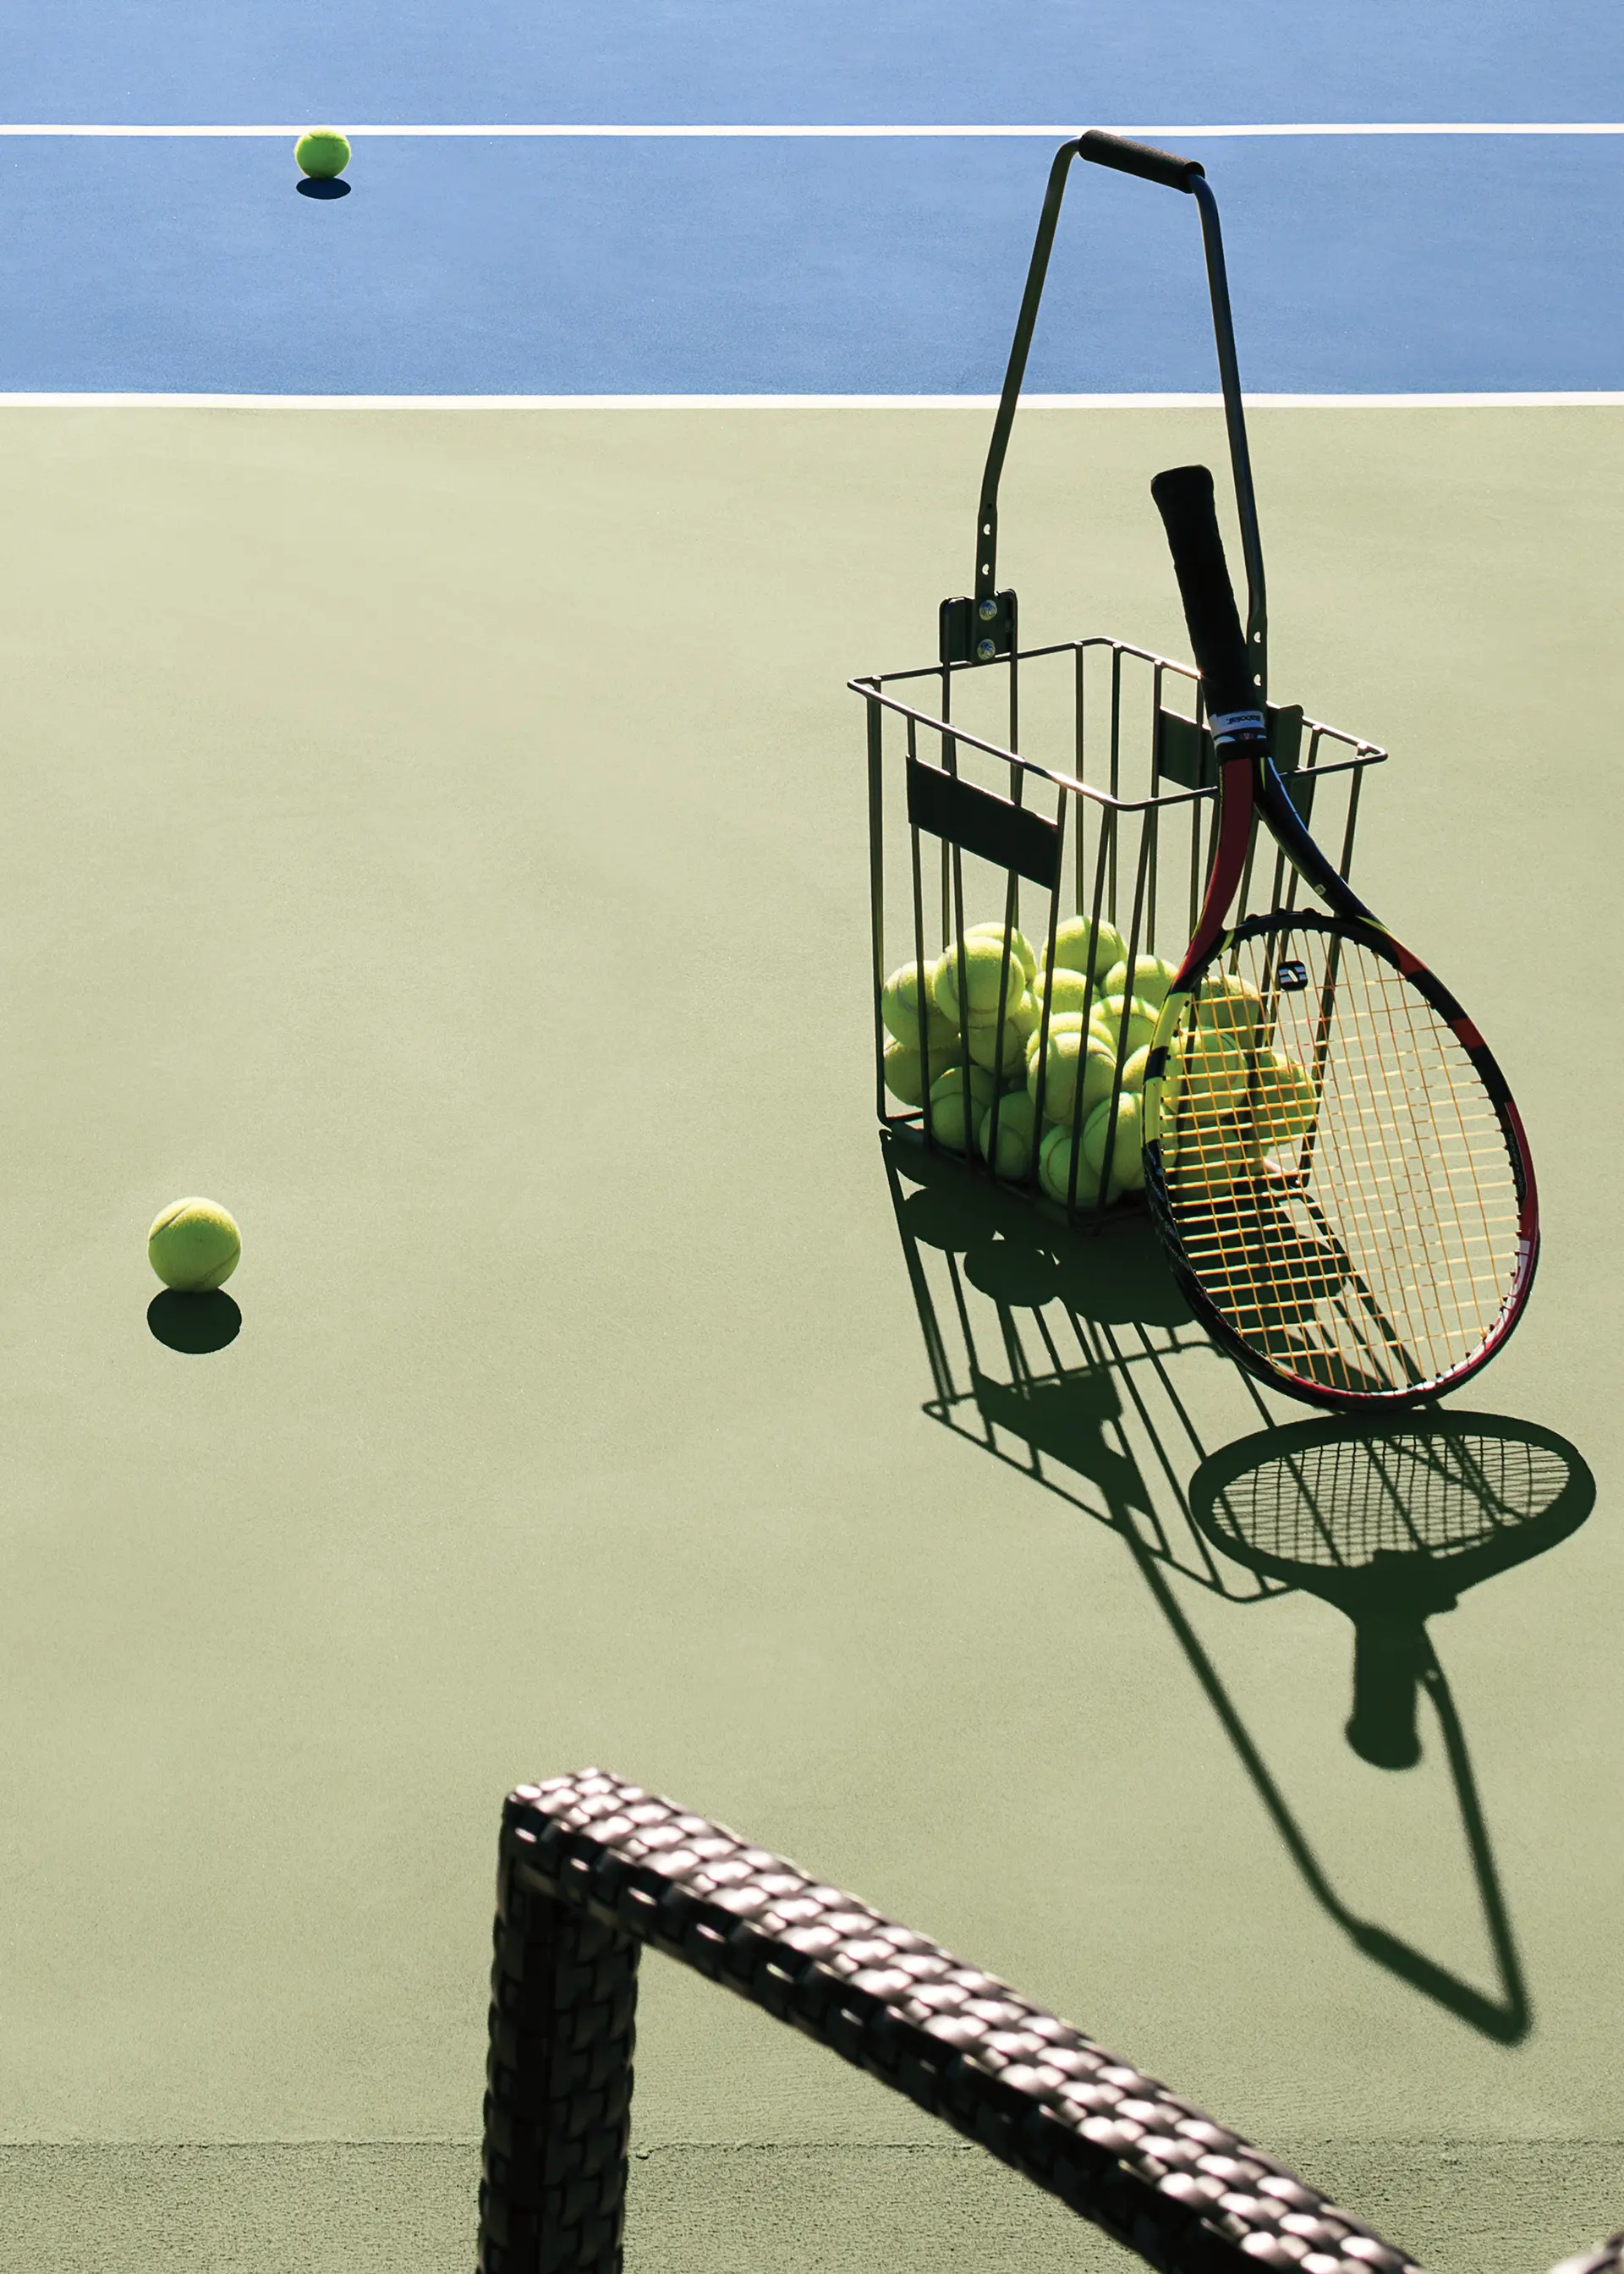 A tennis racket and a basket of tennis balls on a court.